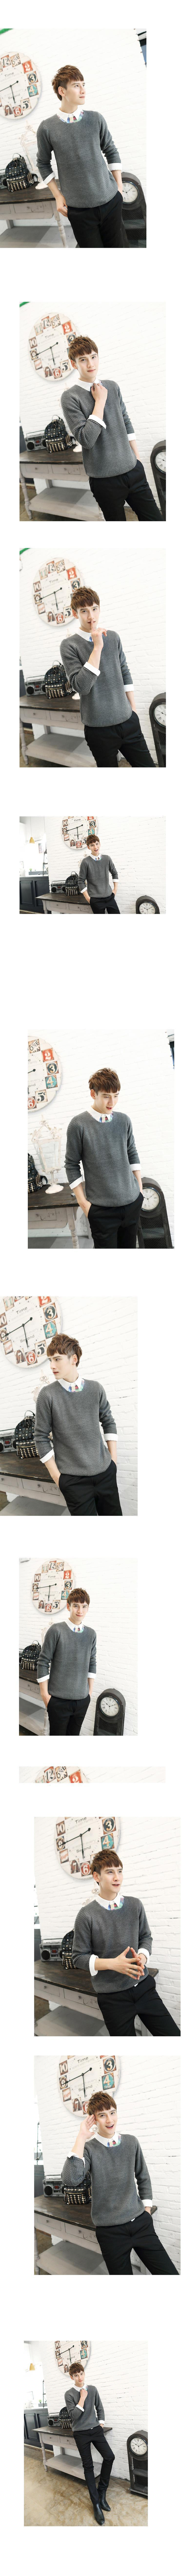 mssefn2014韩版新款经典百搭毛衣男装修身毛线衣针织衫圆领套头毛衣1188-A222